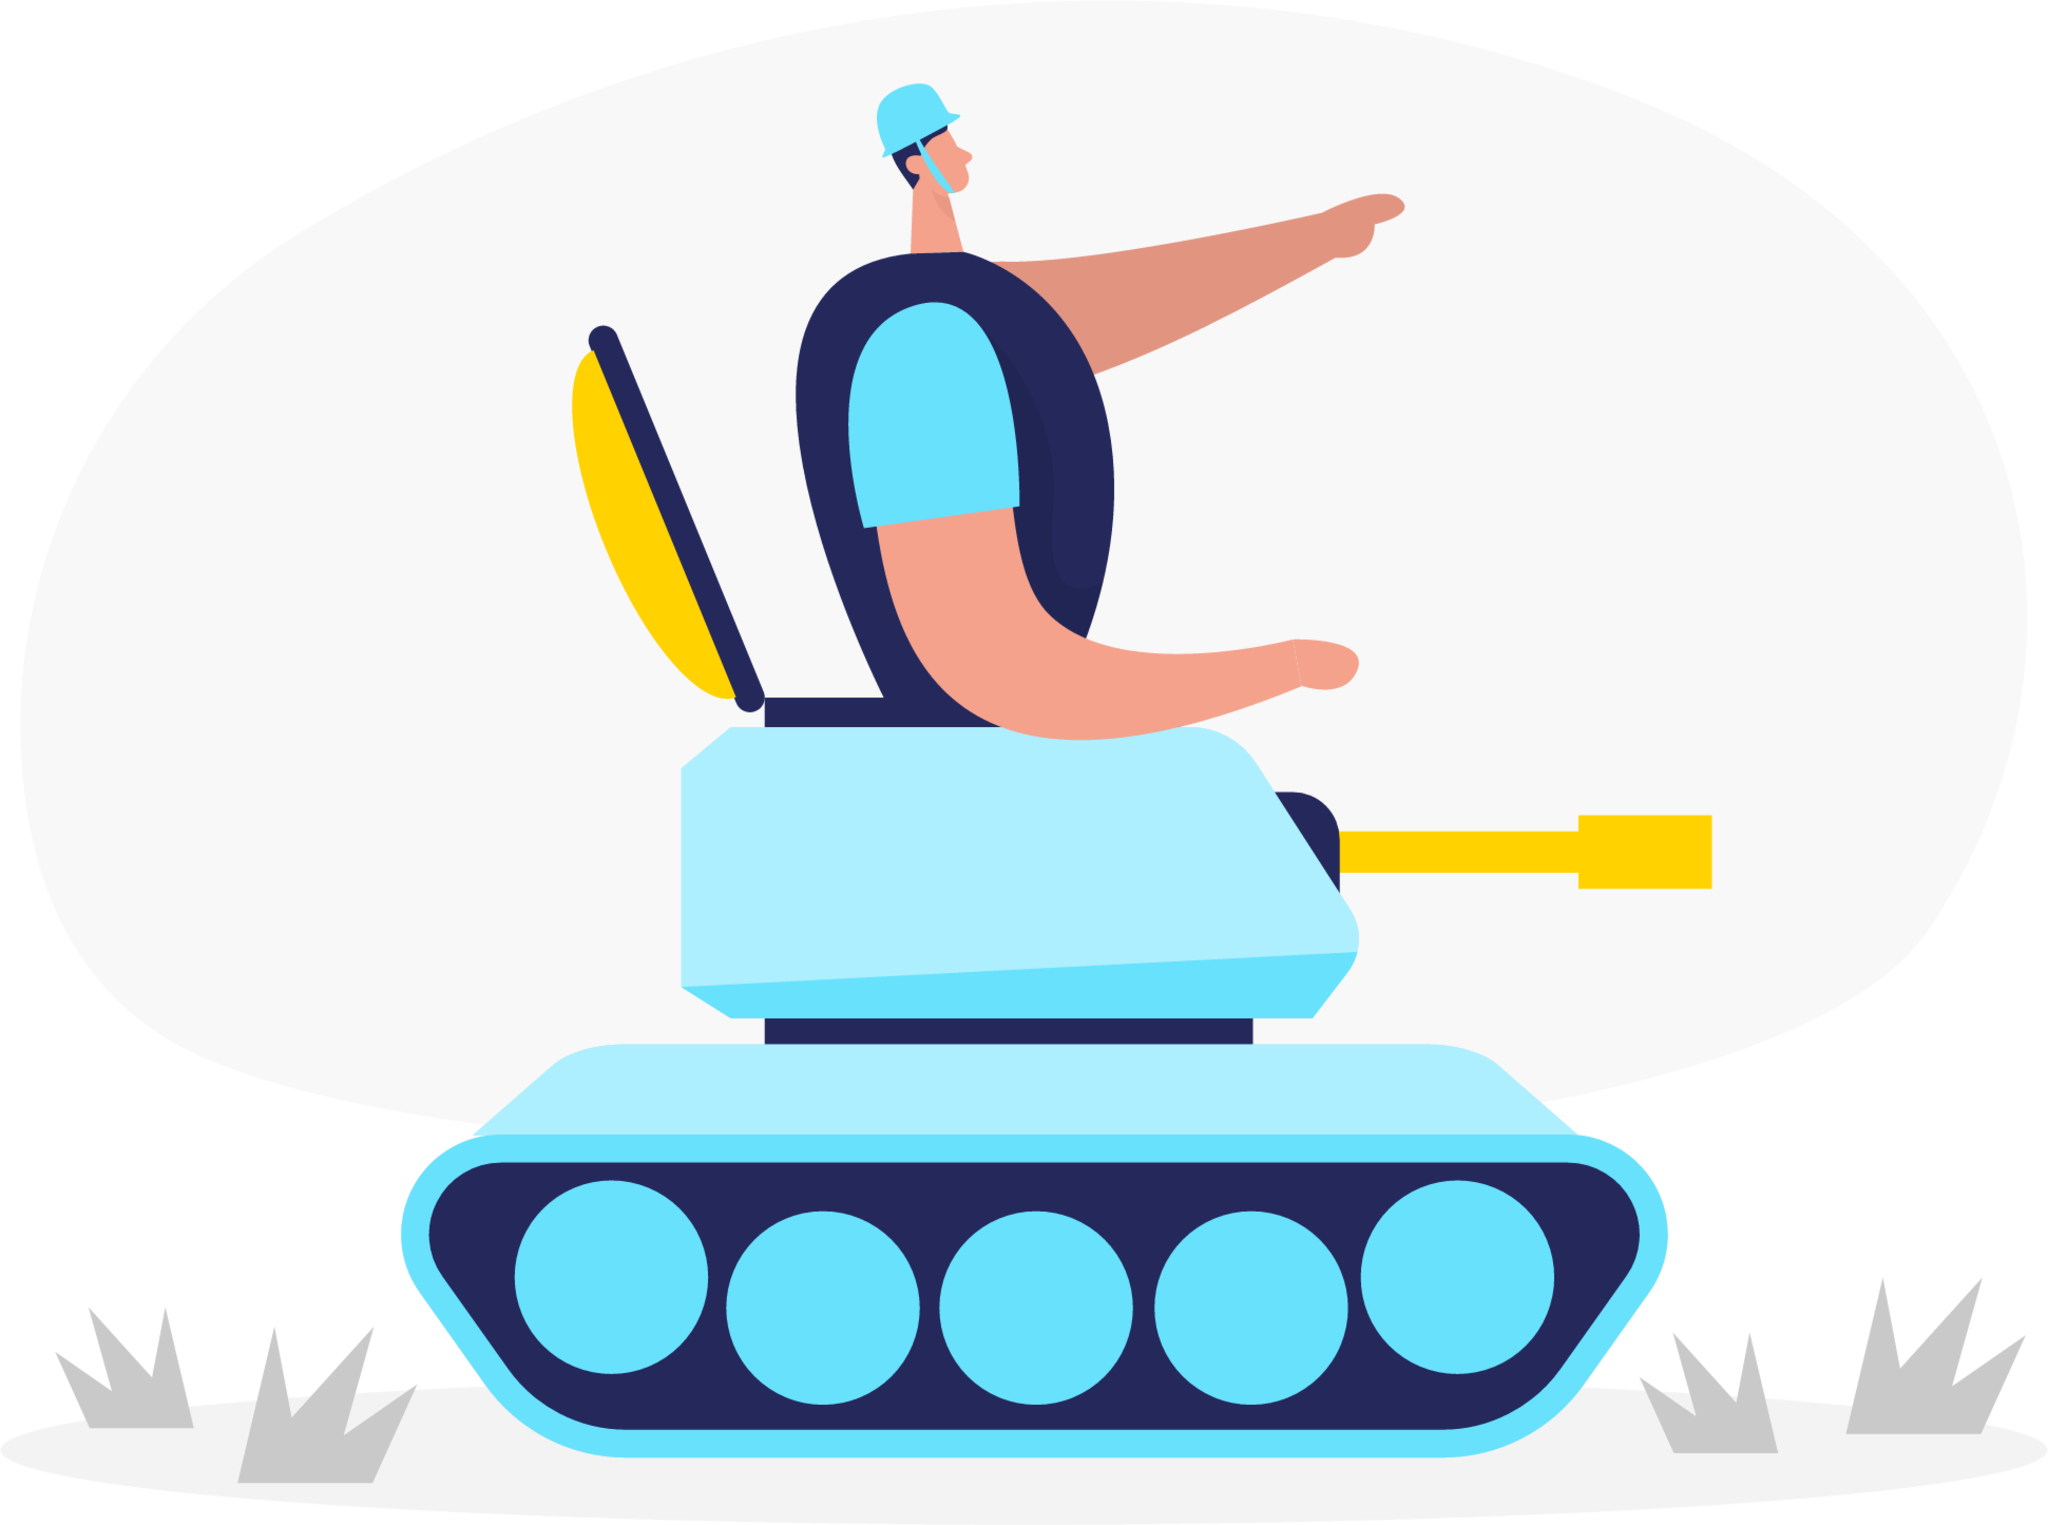 Military illustration